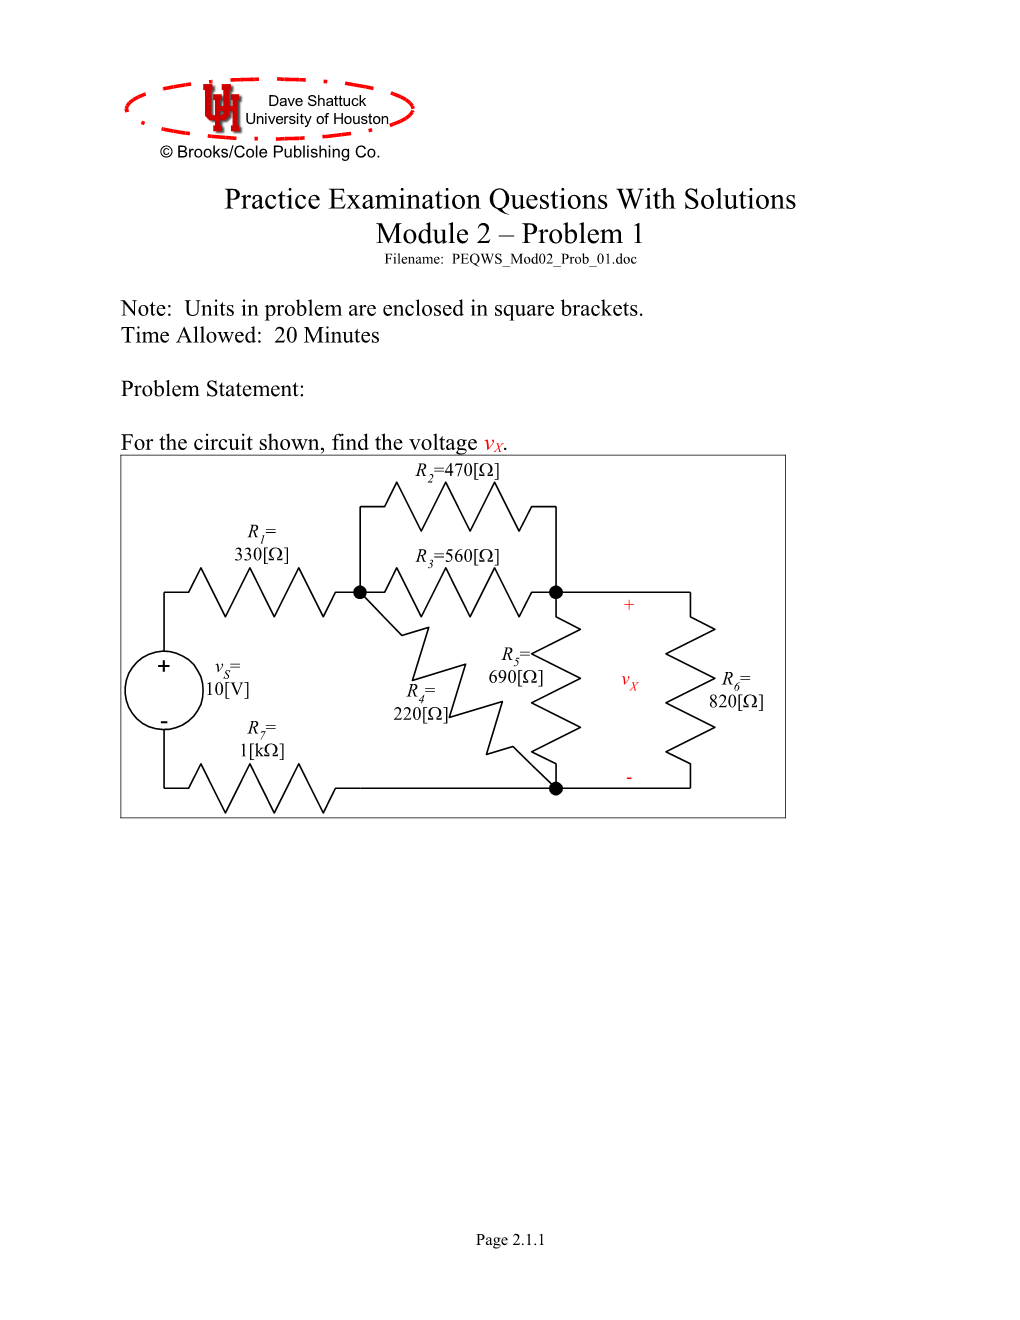 Practice Examination Module 2 Problem 1